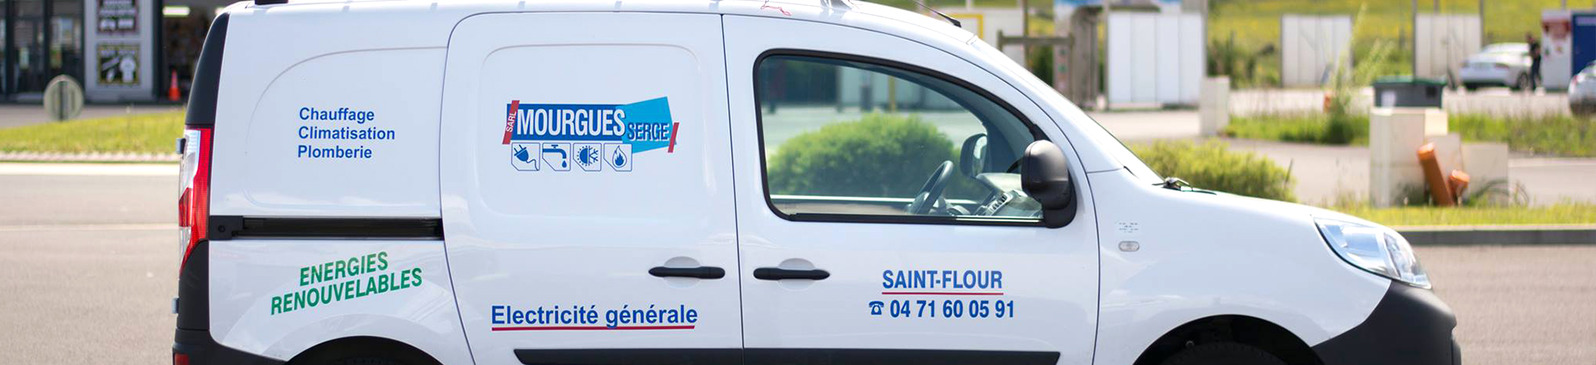 SARL Mourgues Serge- Saint-Flour Cantal